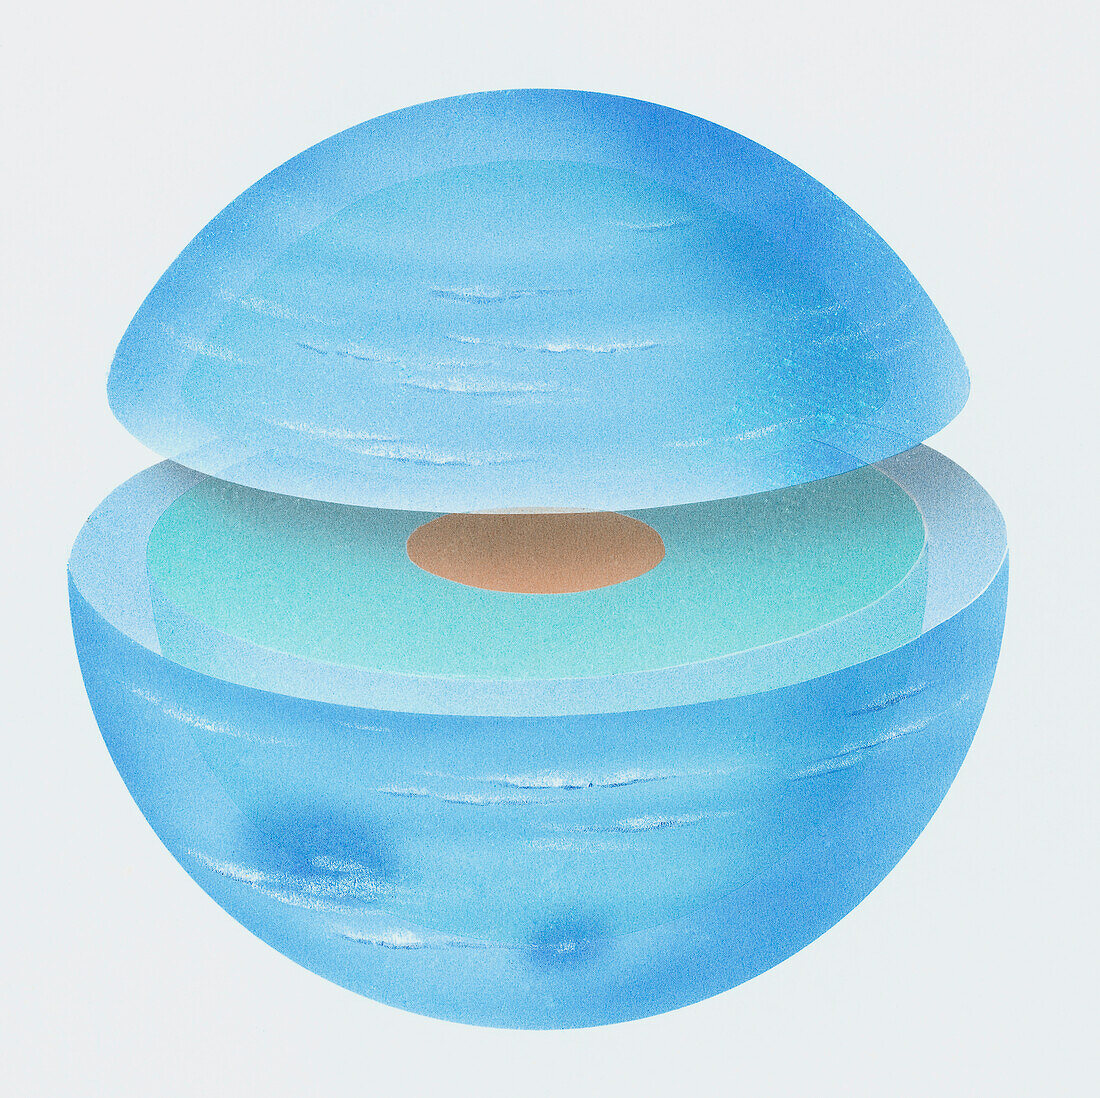 Cross sectional diagram of Neptune